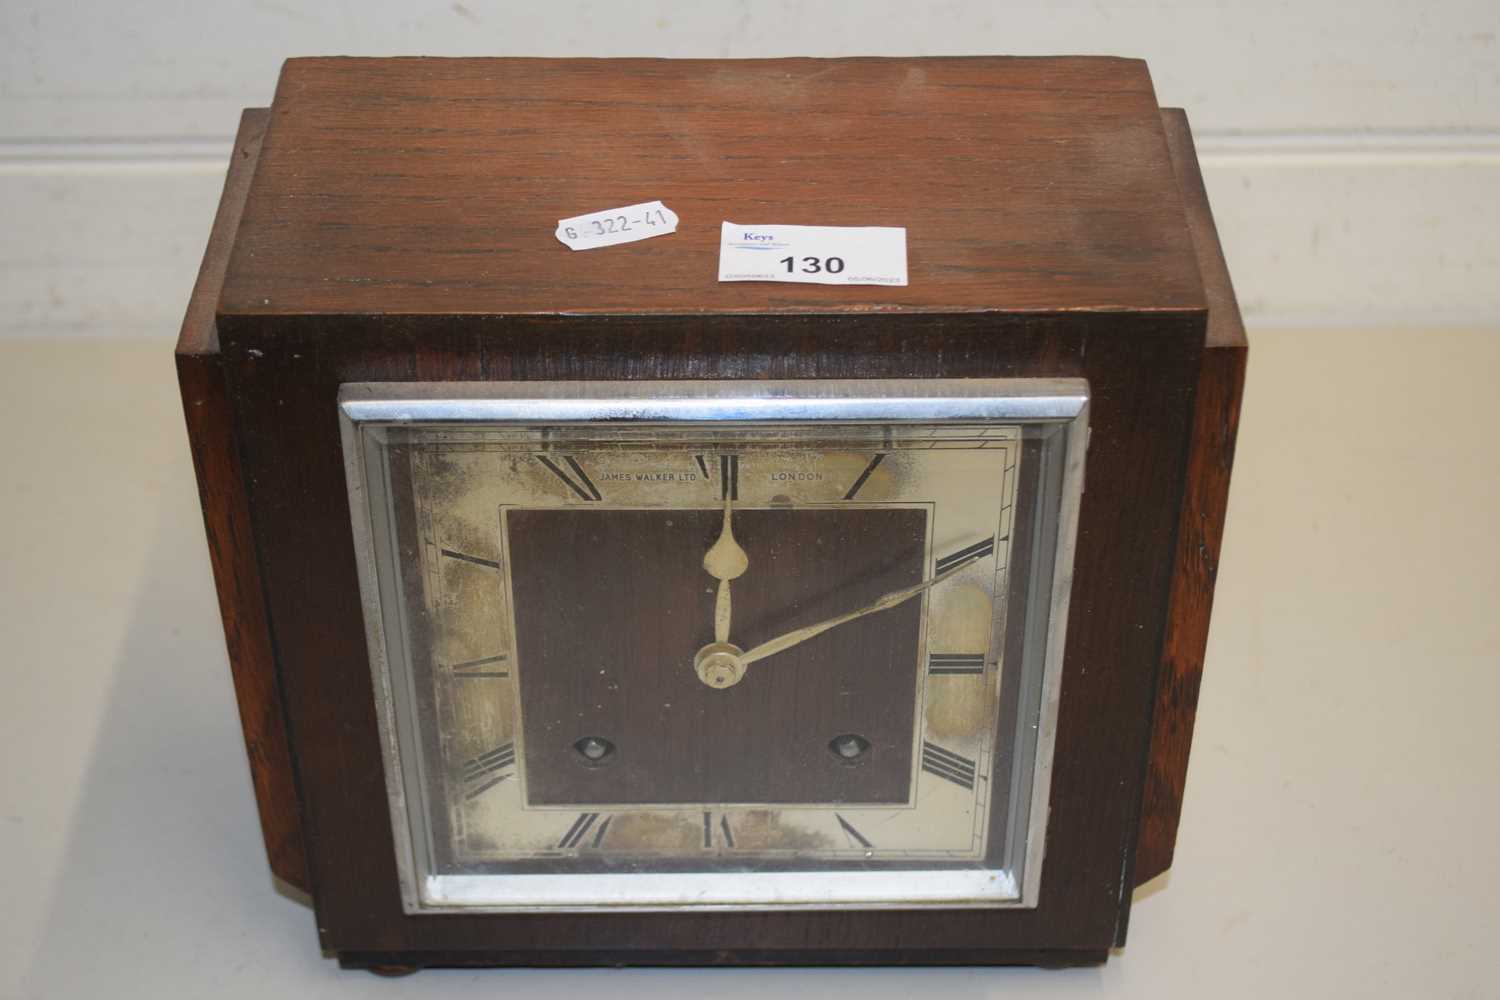 Vintage mantel clock by James Walker of London